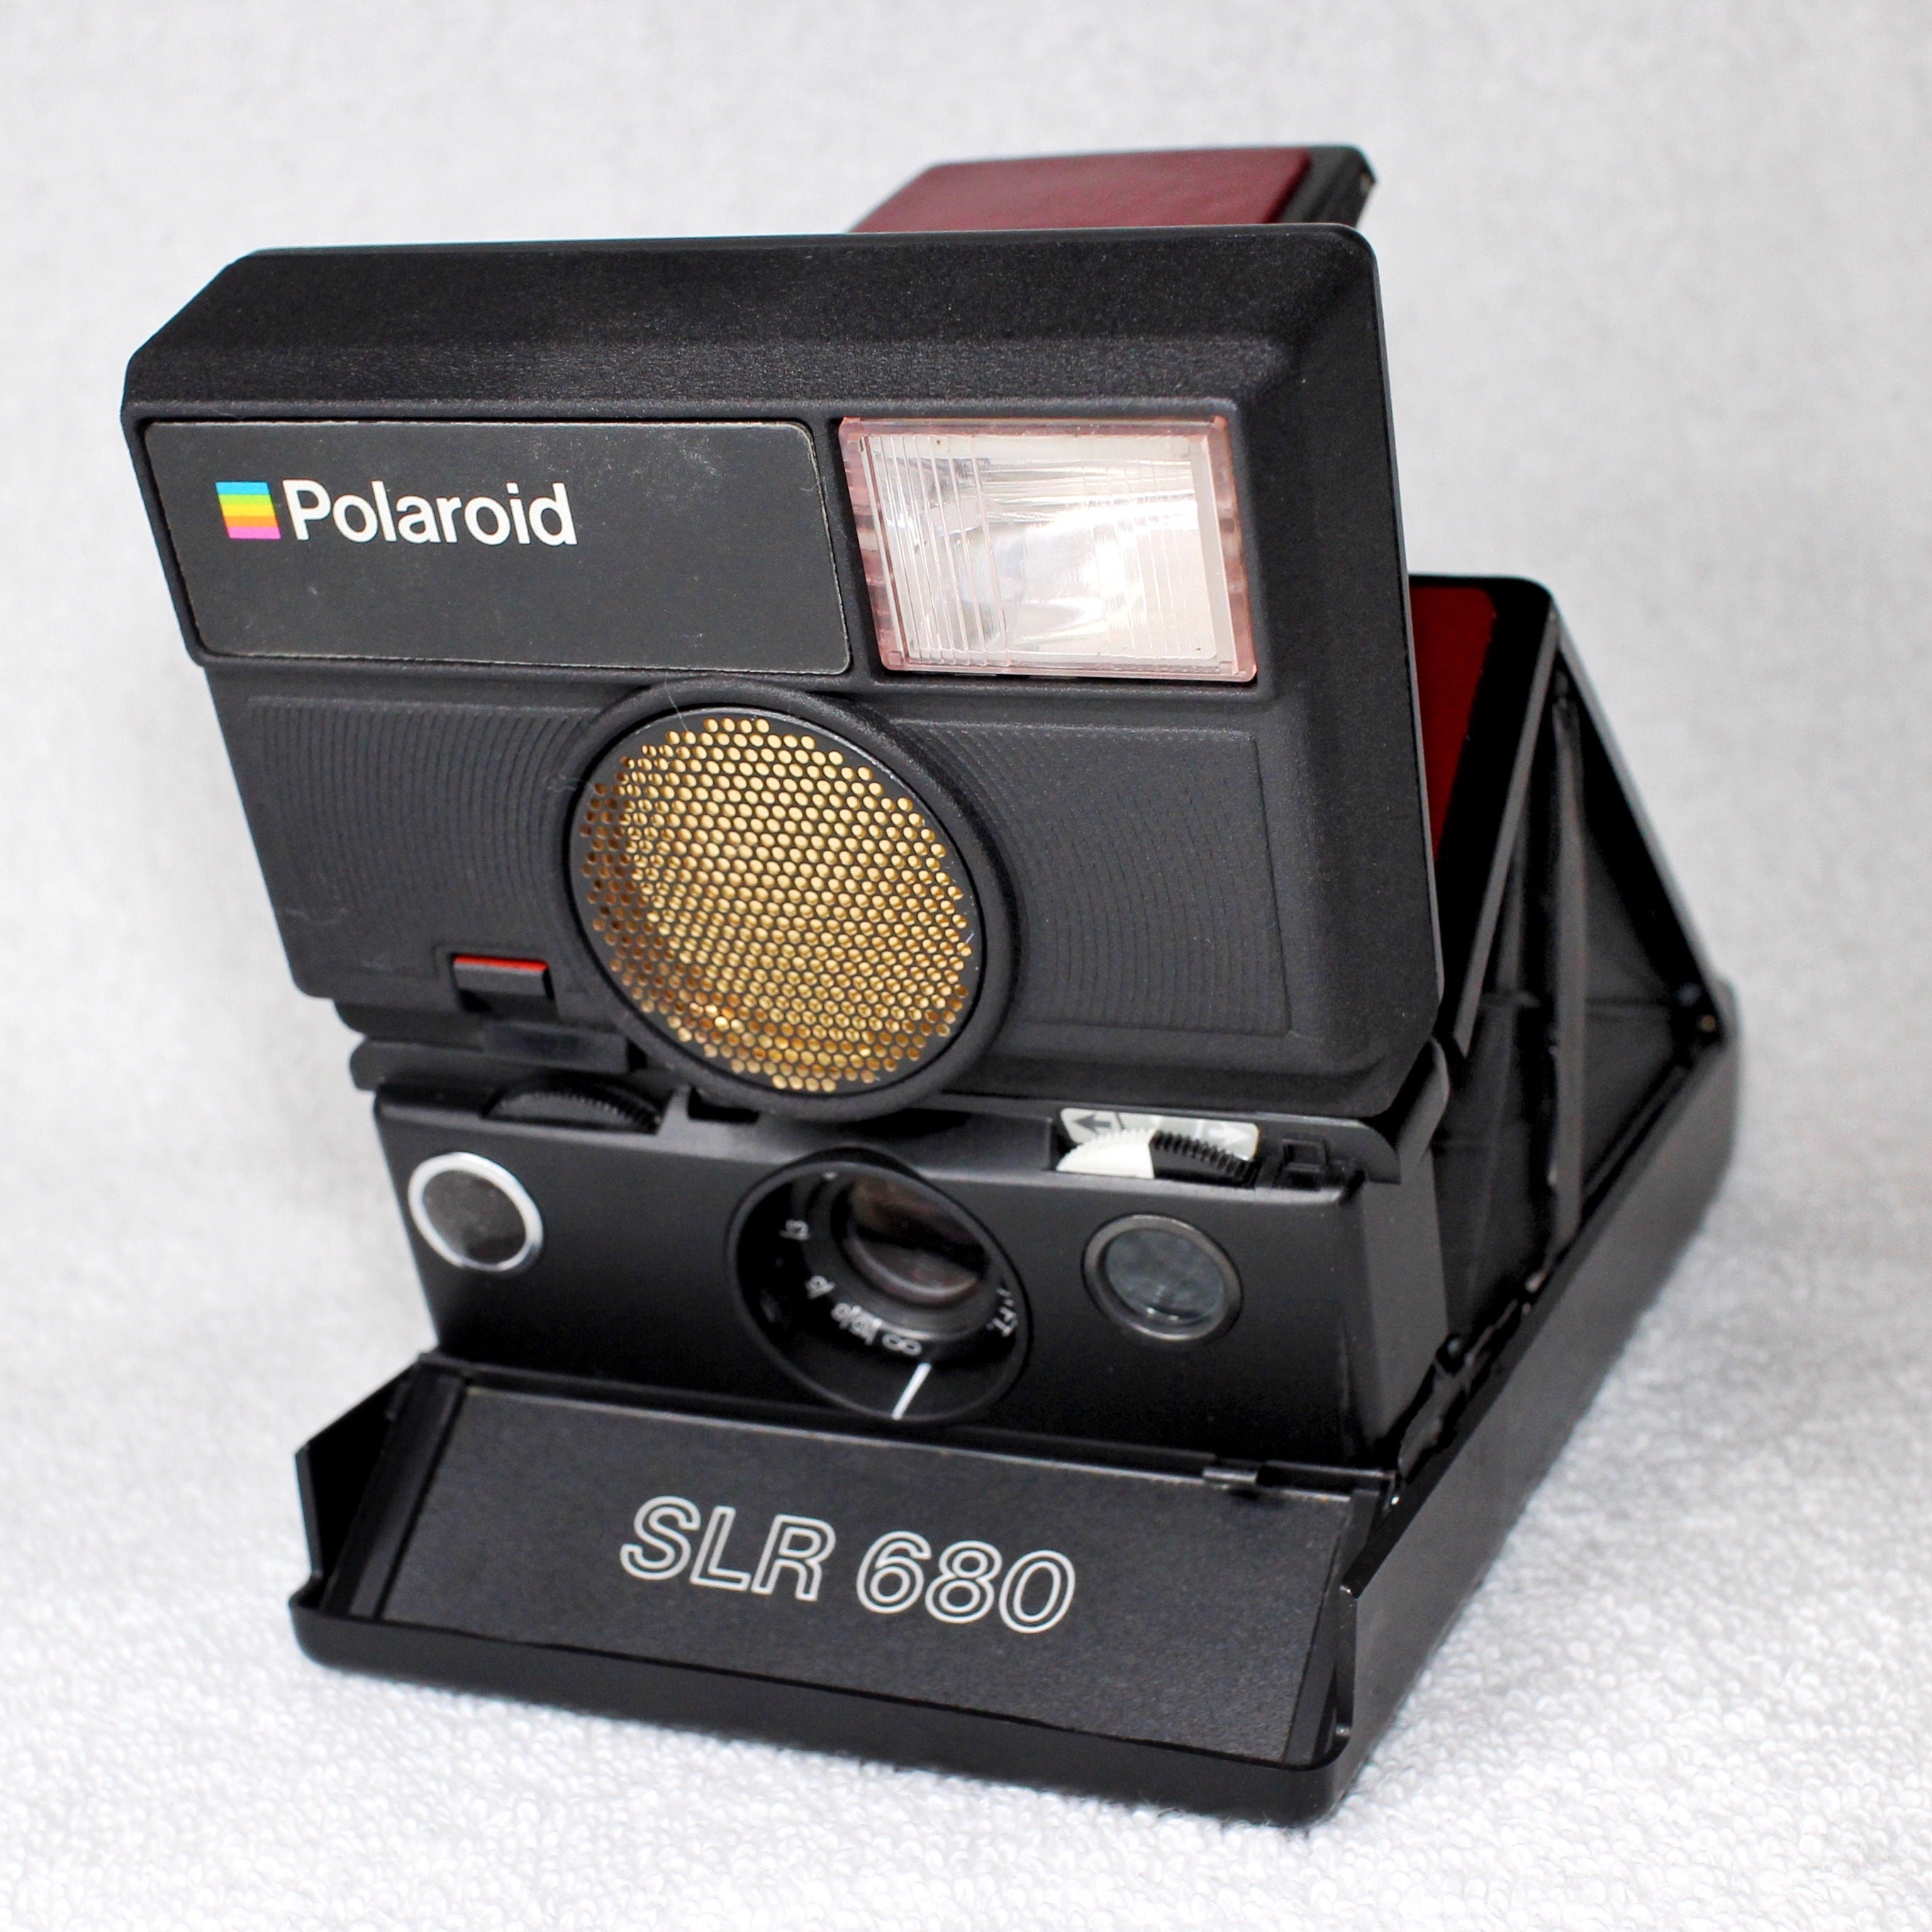 Rebuilt Wine Red skinned Polaroid SLR 680 Camera with new 3D